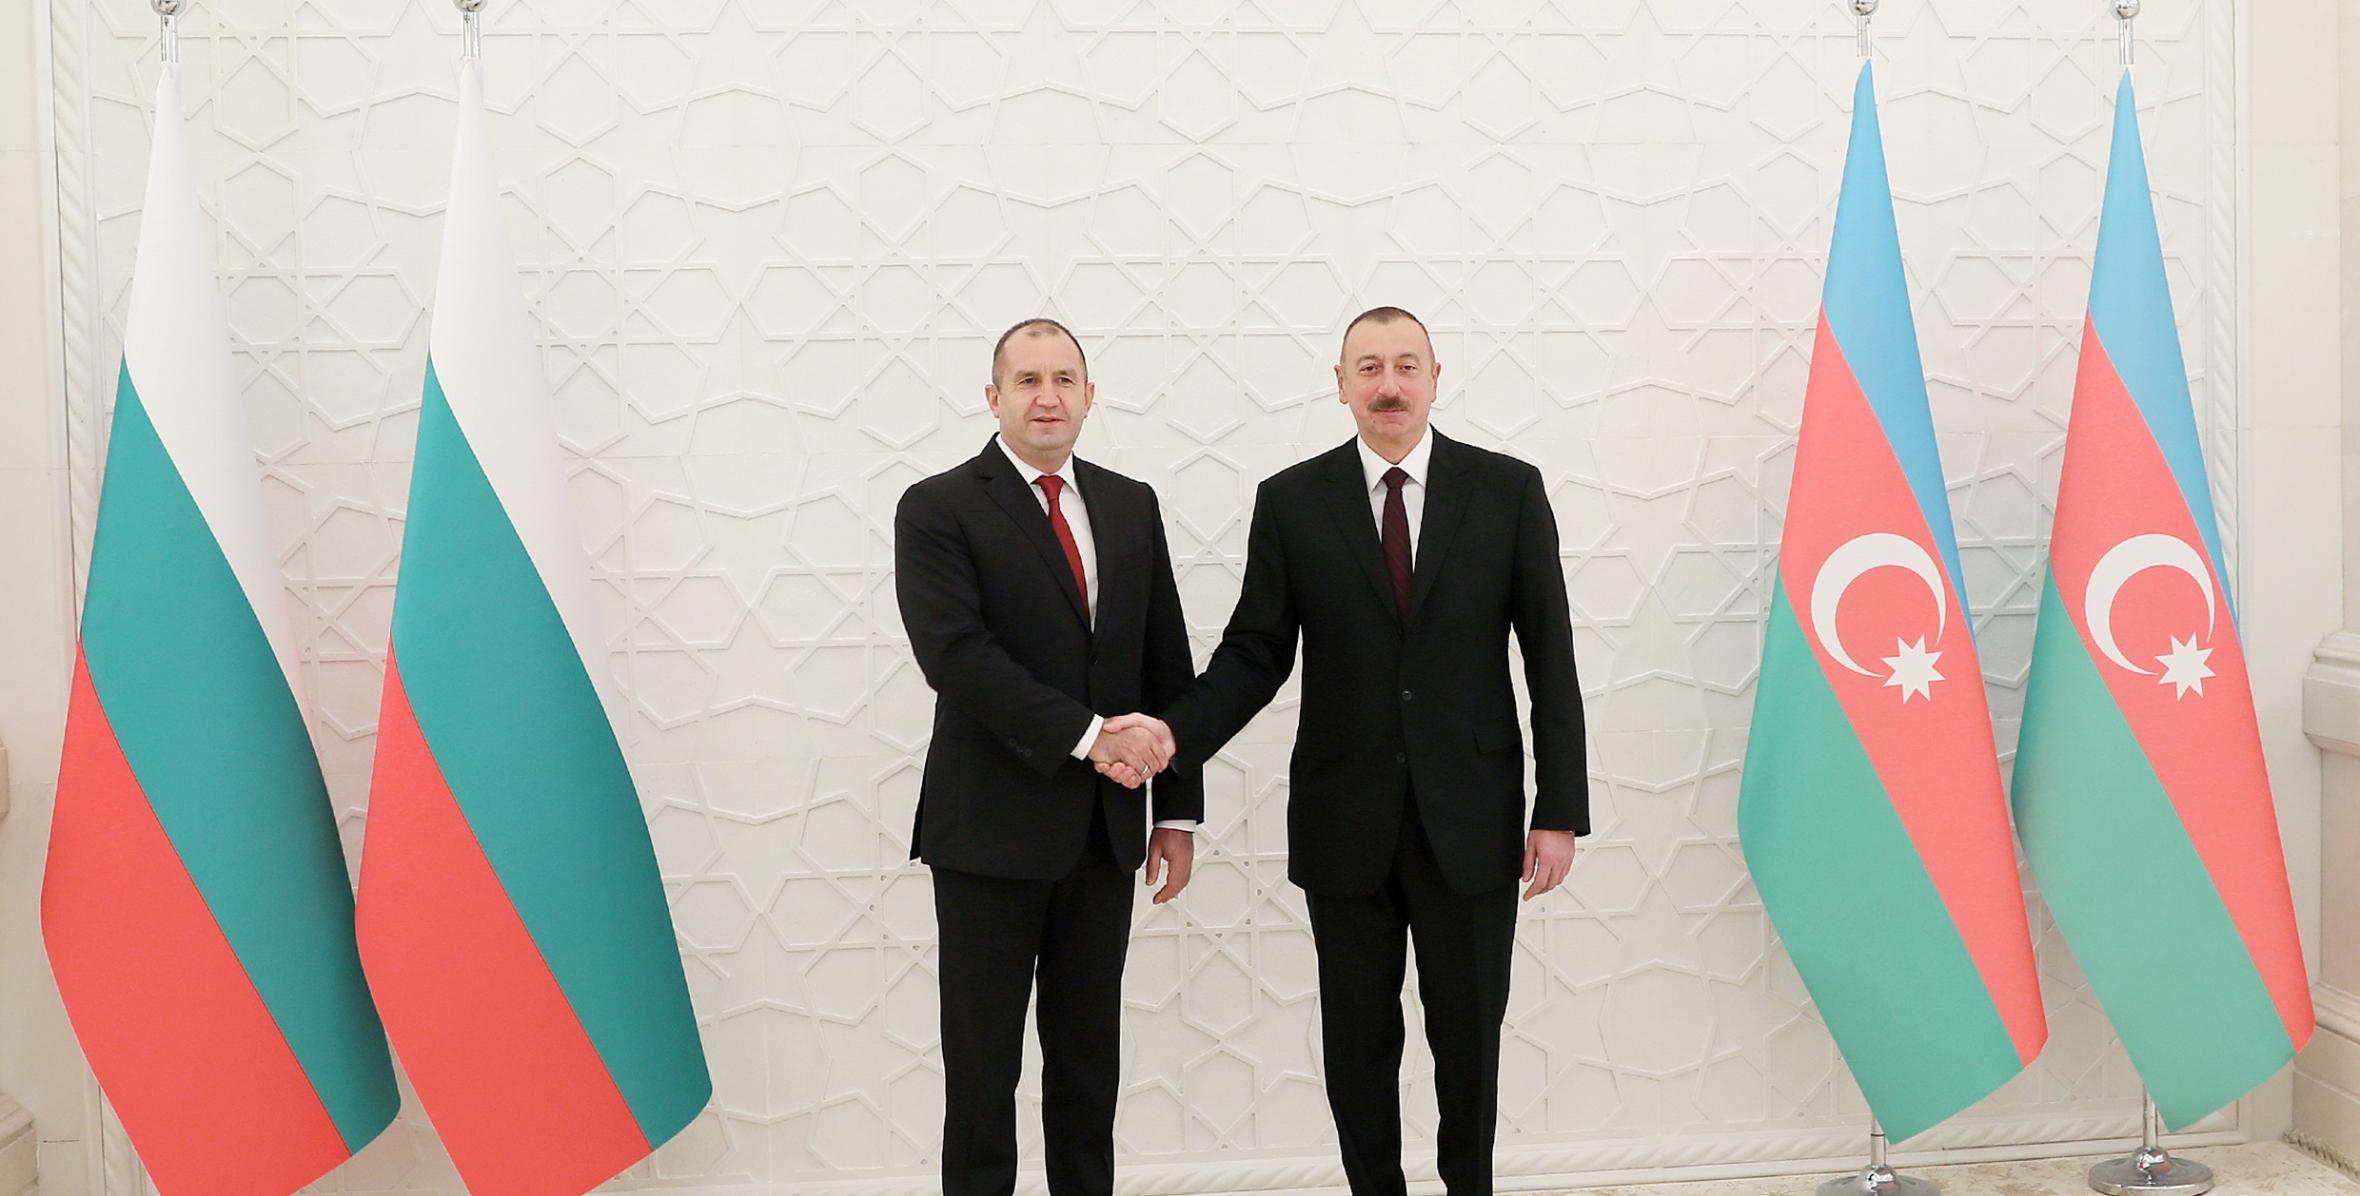 Official welcome ceremony was held for Bulgarian President Rumen Radev